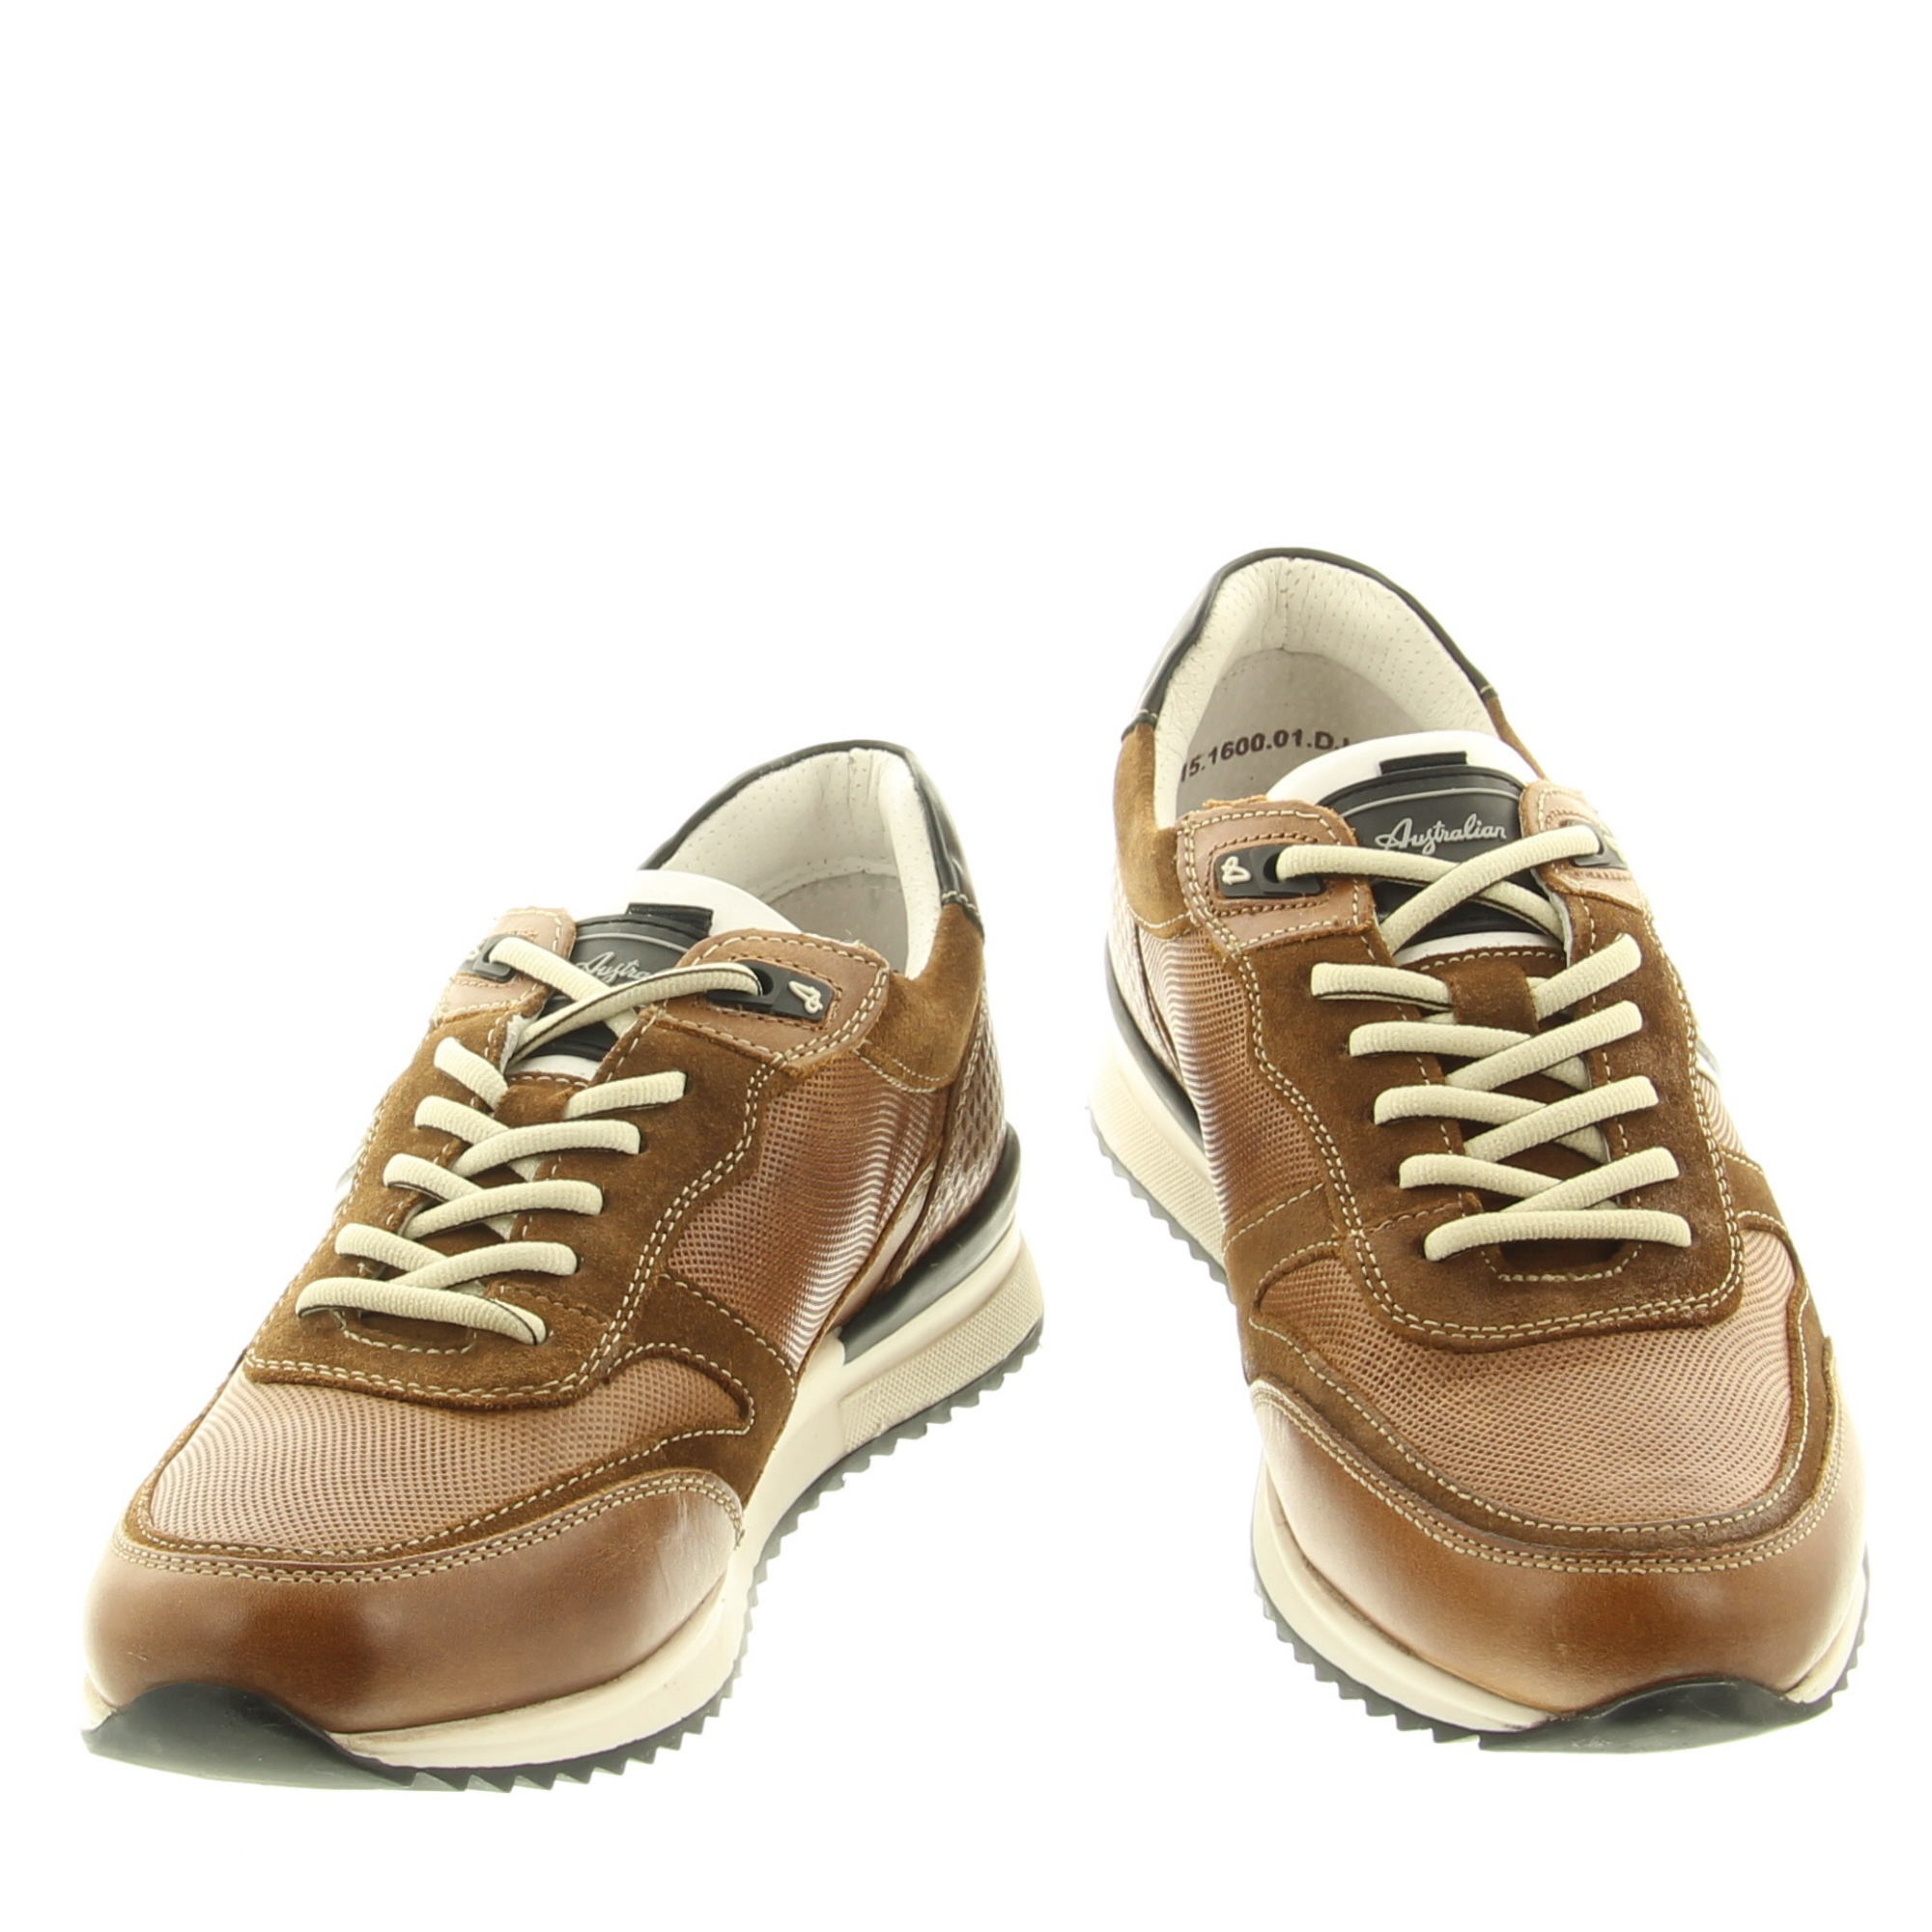 Australian Footwear Filmon 15.1600.01 DJA Cognac Combi